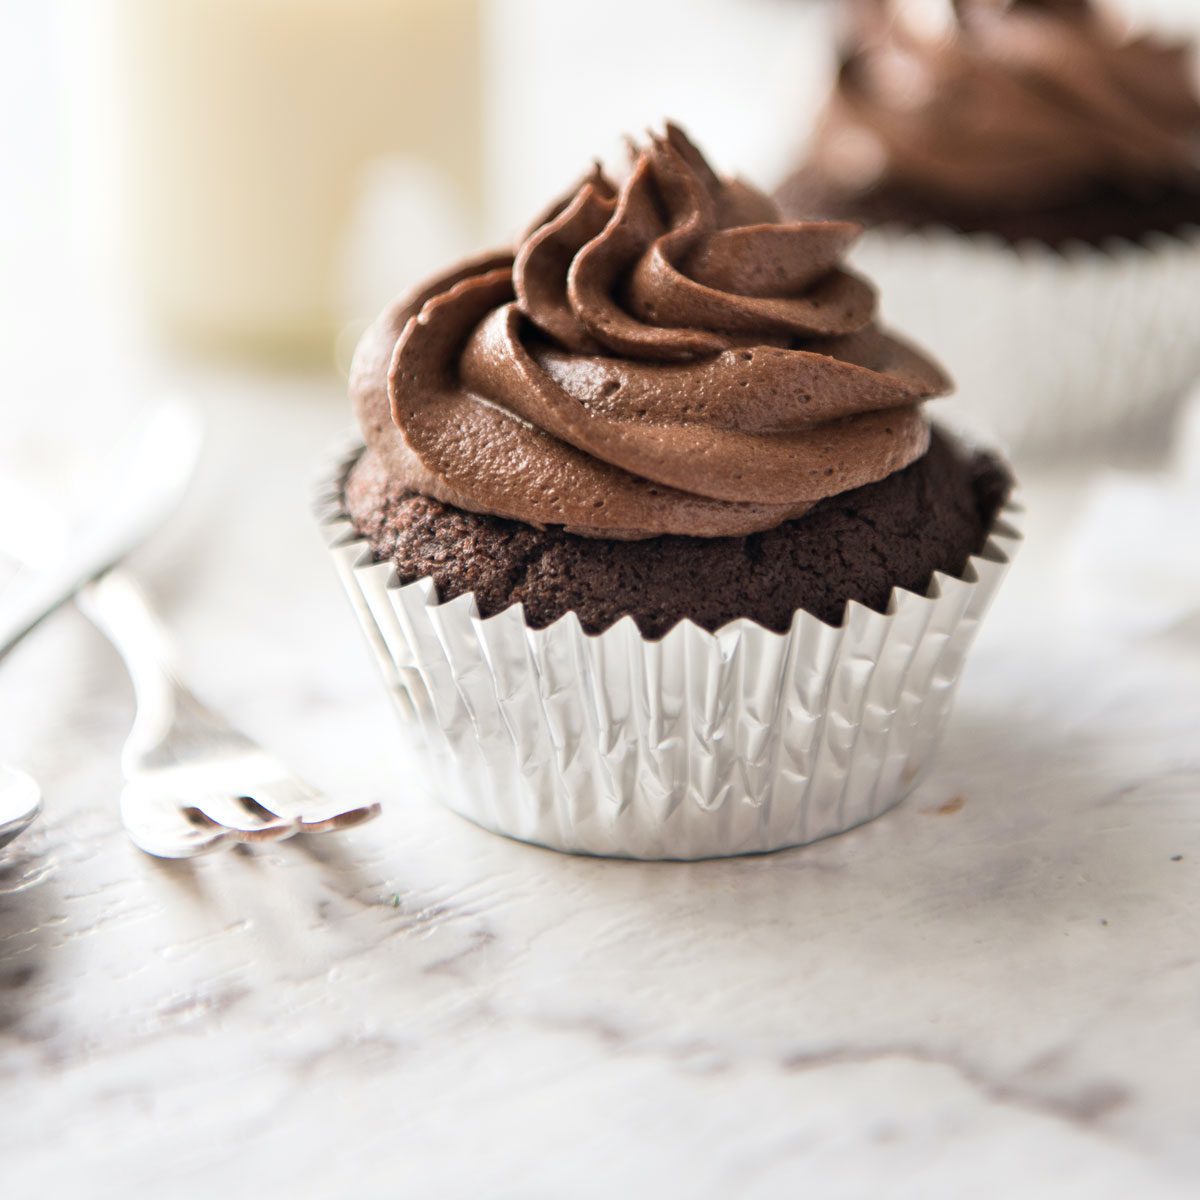 Chocolate cupcakes recipe